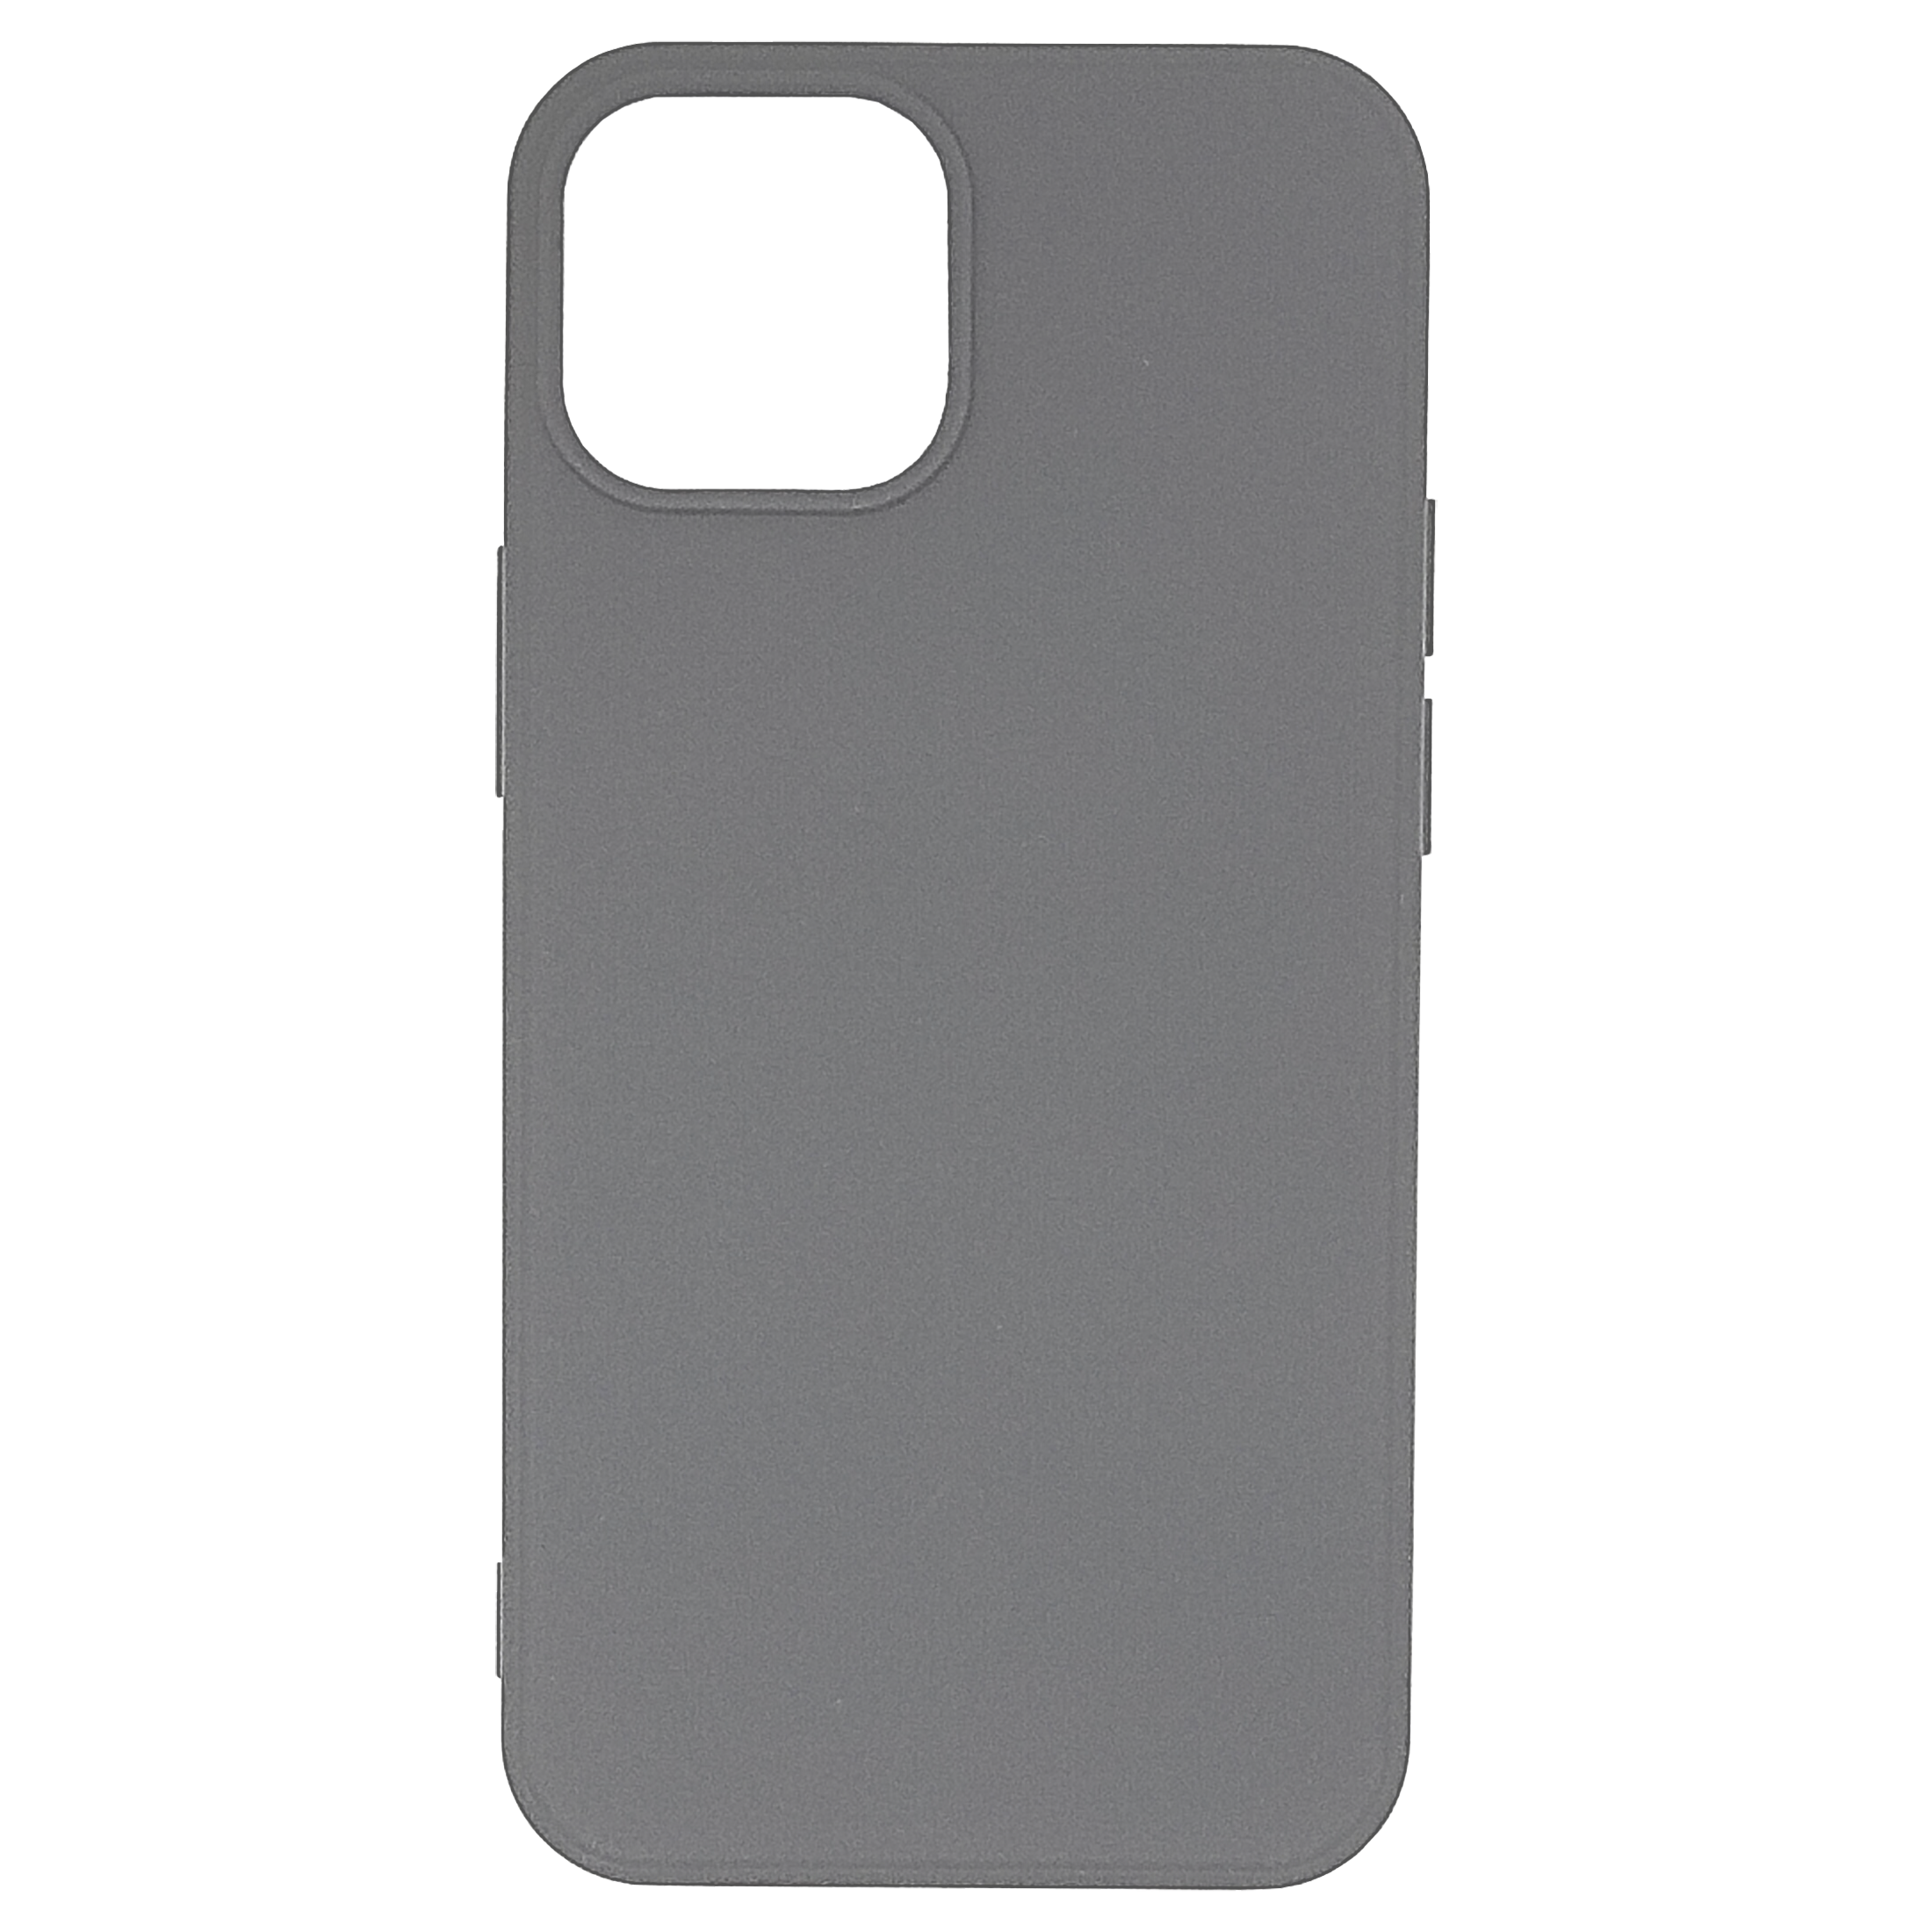 Soundrevo TPU Back Case For iPhone 13 Mini (Anti-Slip, C013M, Grey)